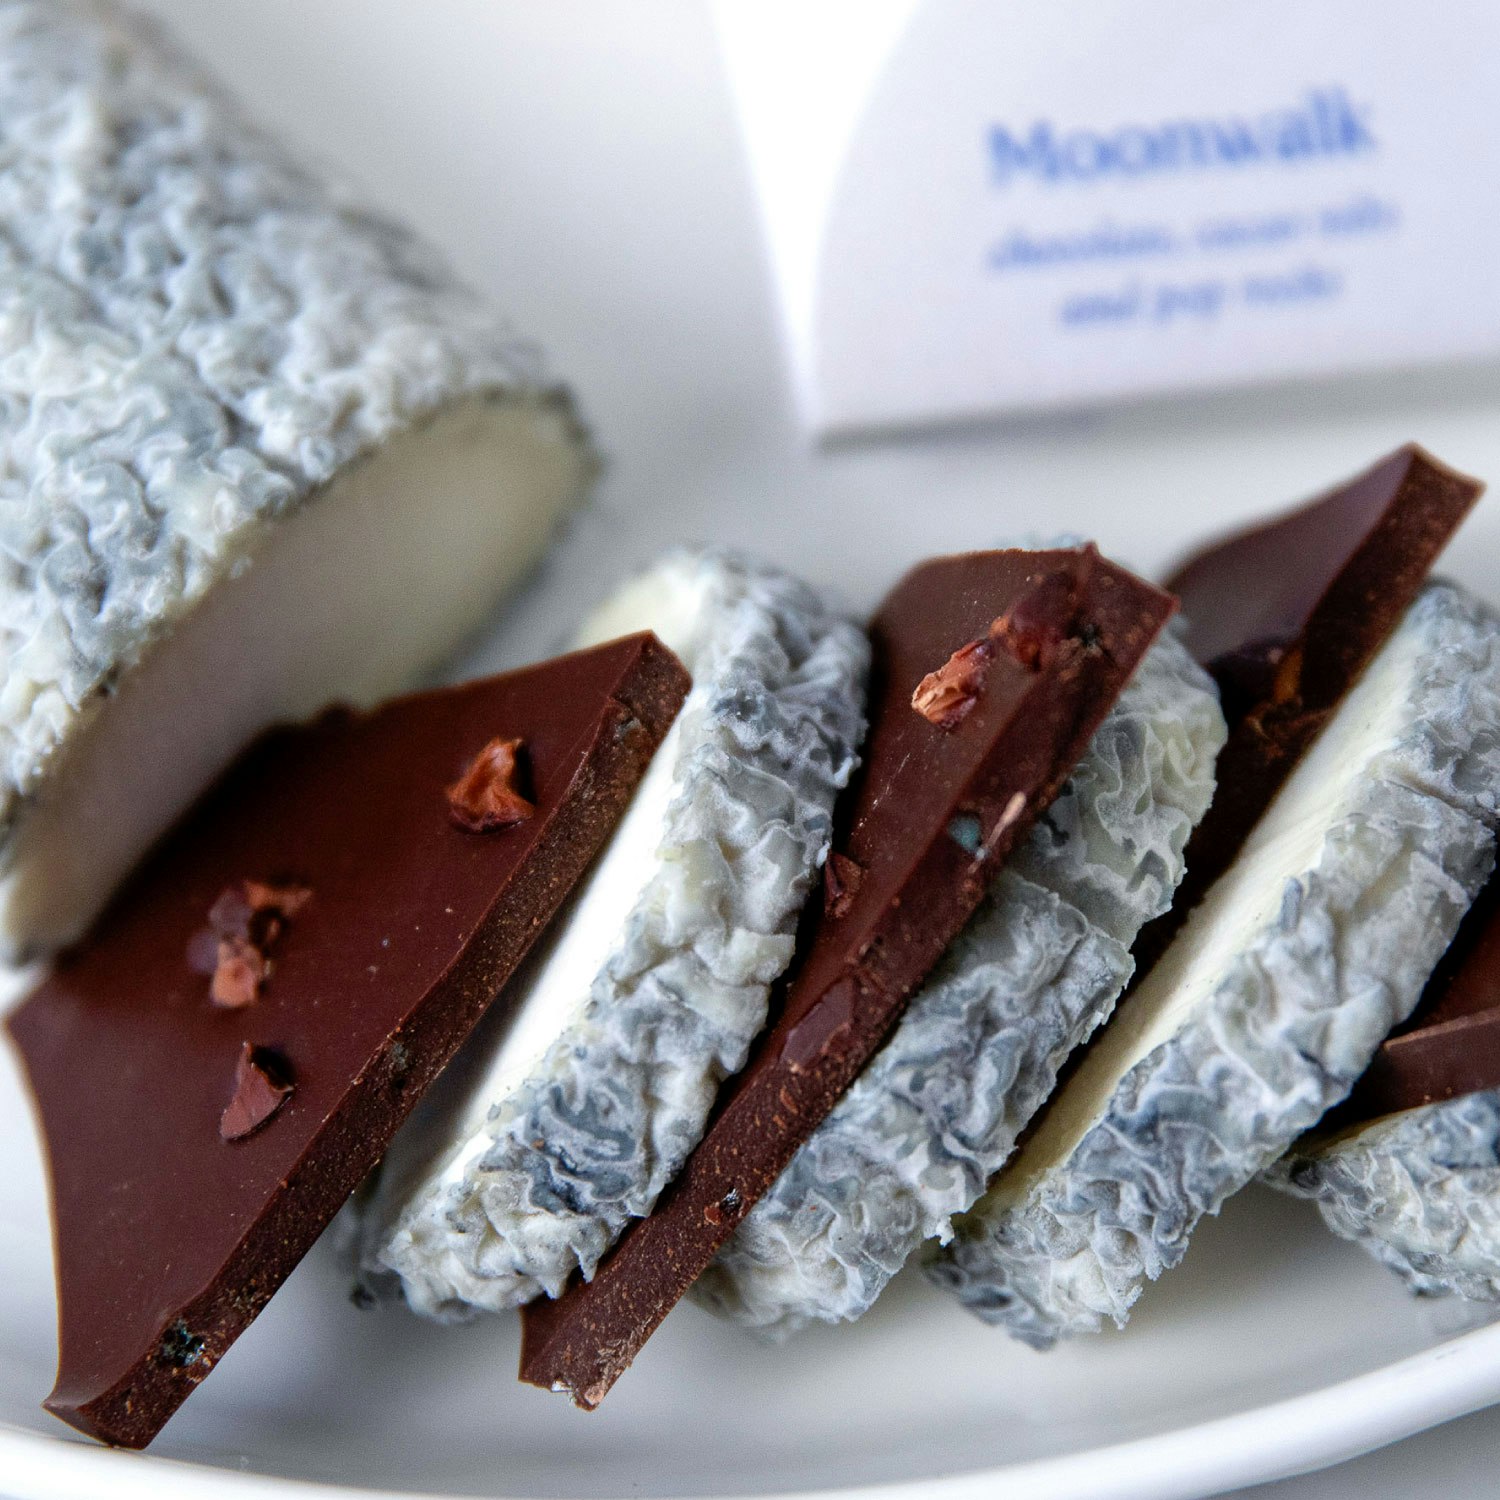 cloudforest moonwalk chocolate specialty foods